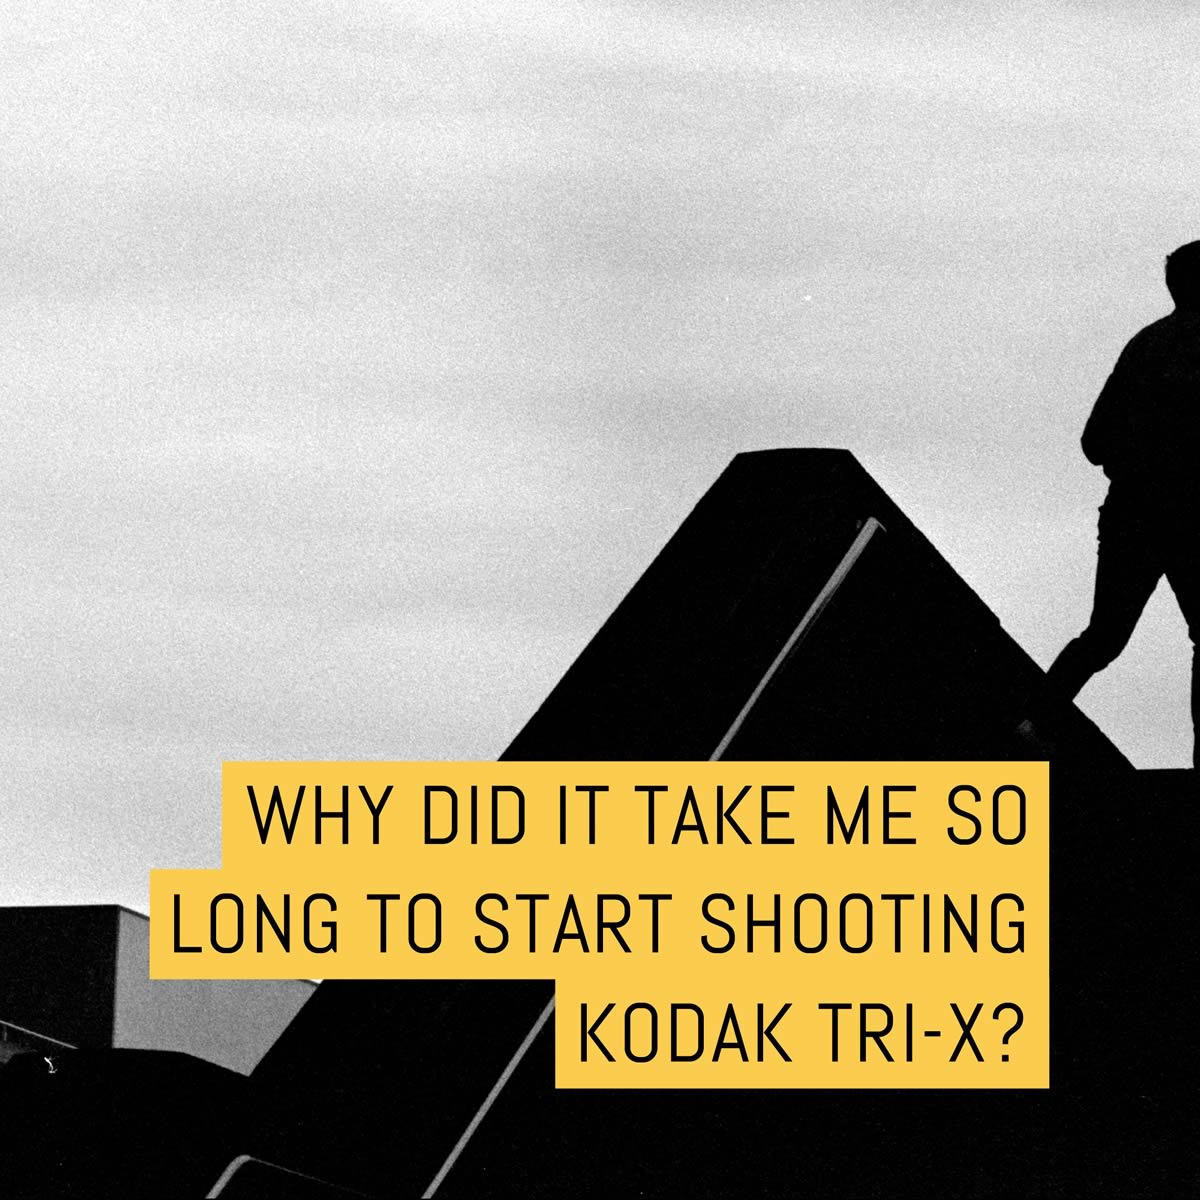 Why did it take me so long to start shooting Kodak Tri-X?